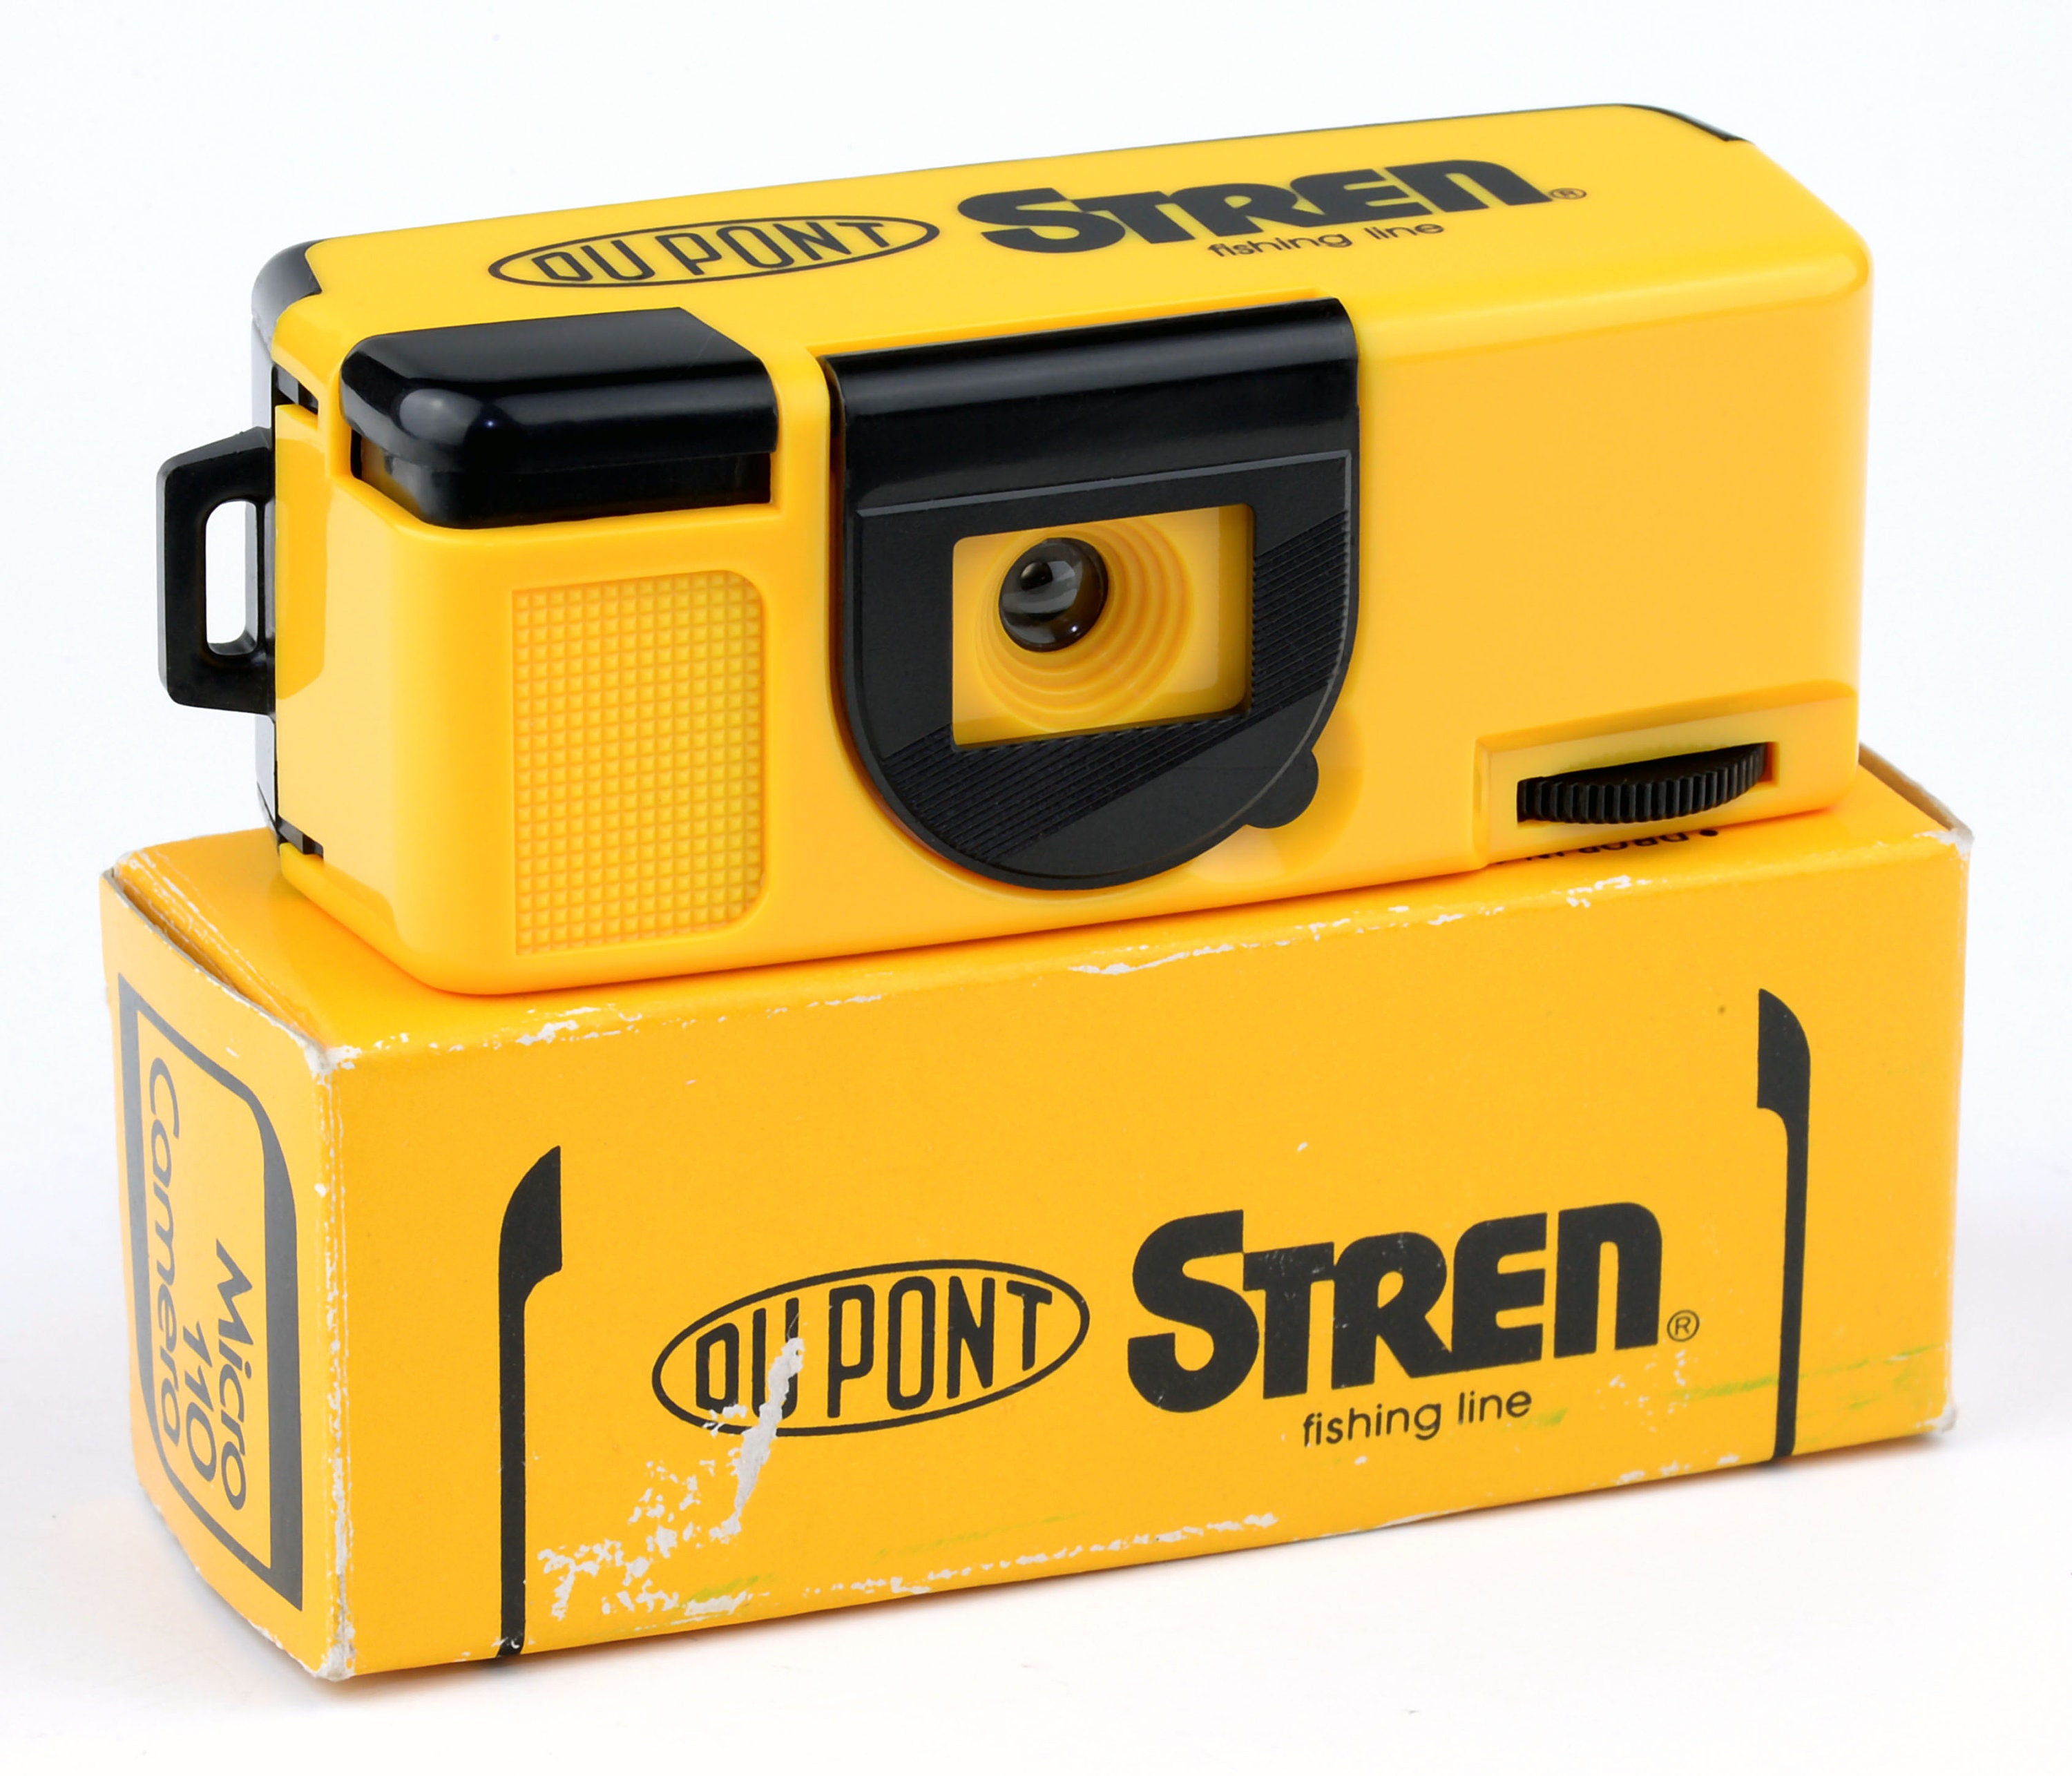 Dupont Stren Micro 110 Miniature Camera Uses 110 Film in Original